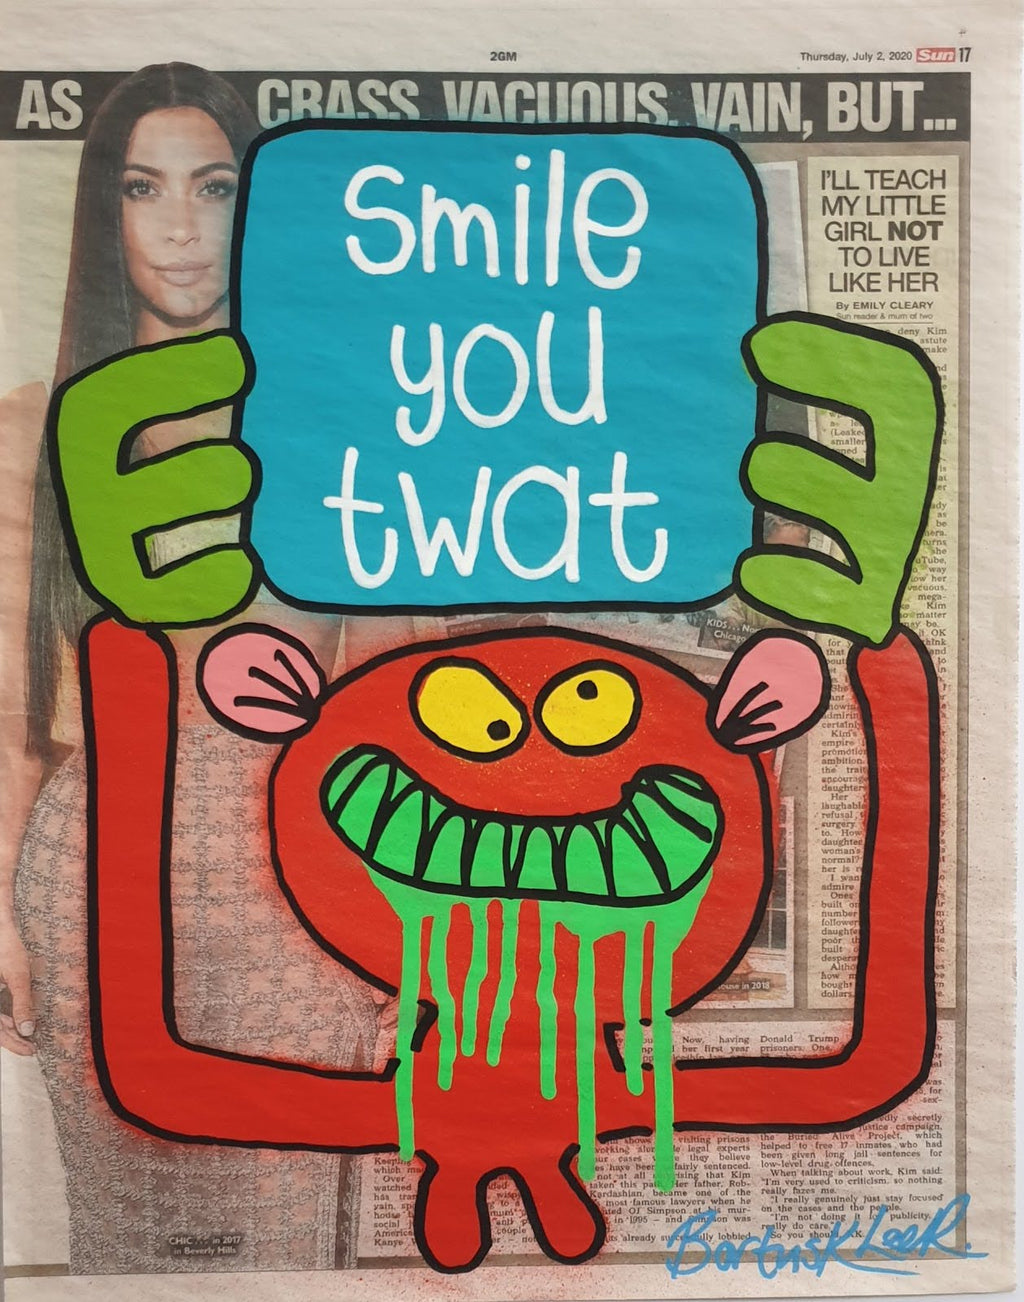 Smile you twat